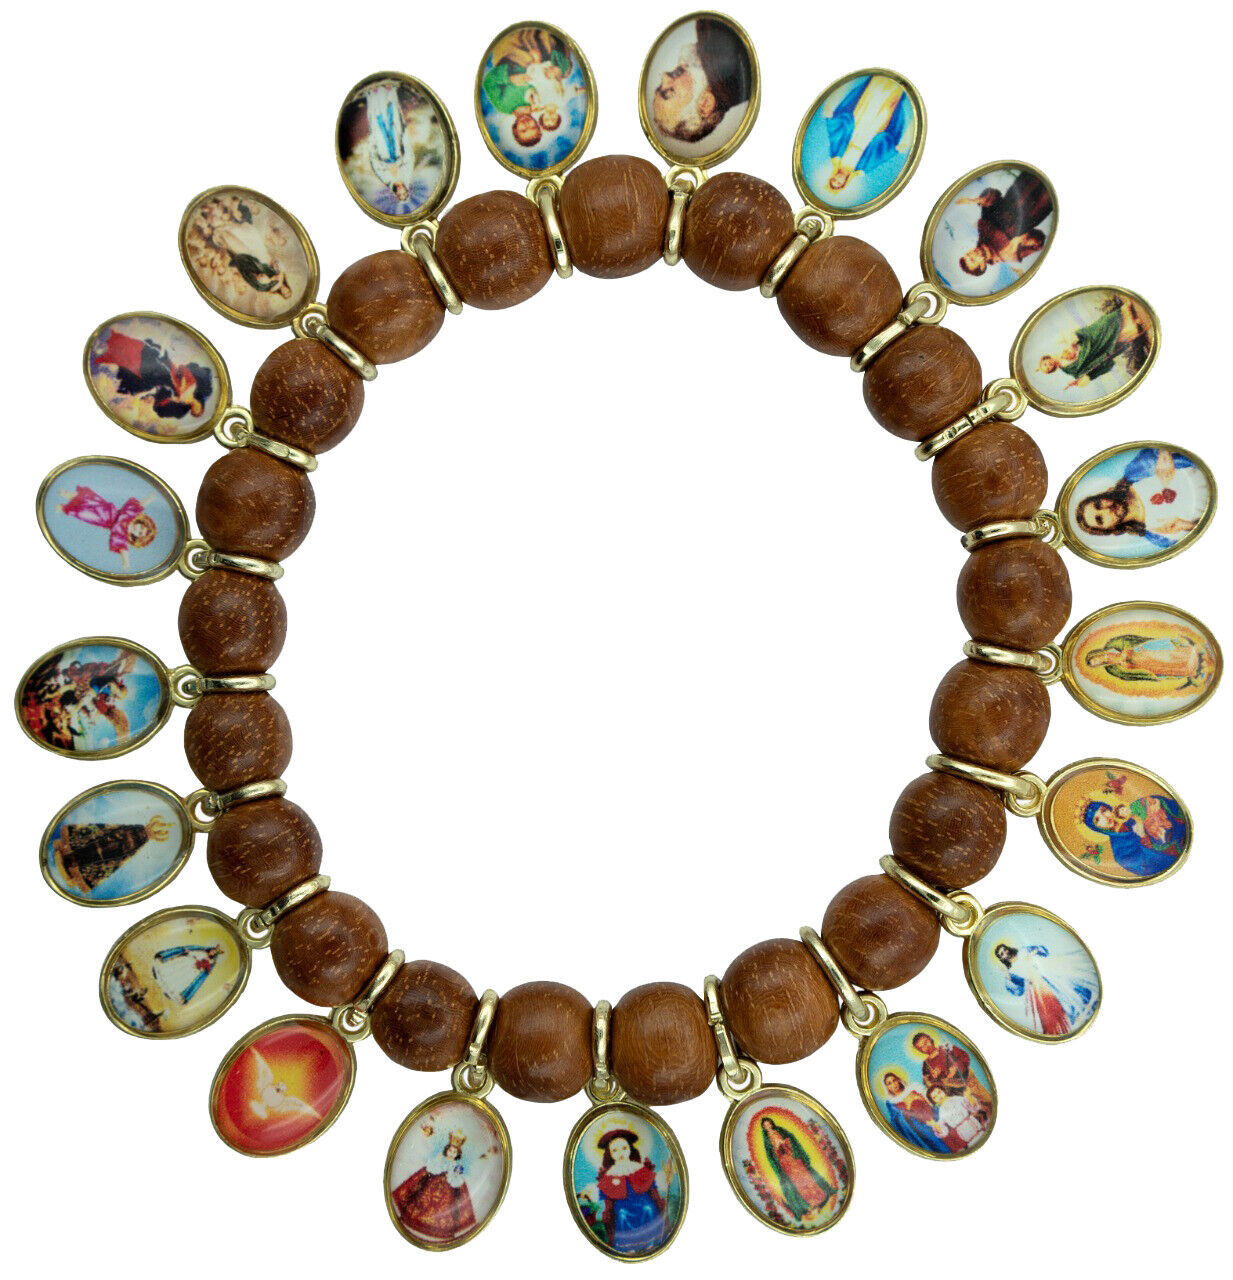 Solid Wood Beads Catholic Bracelet 21 Antique Gold Medals of Mary, Jesus, Saints